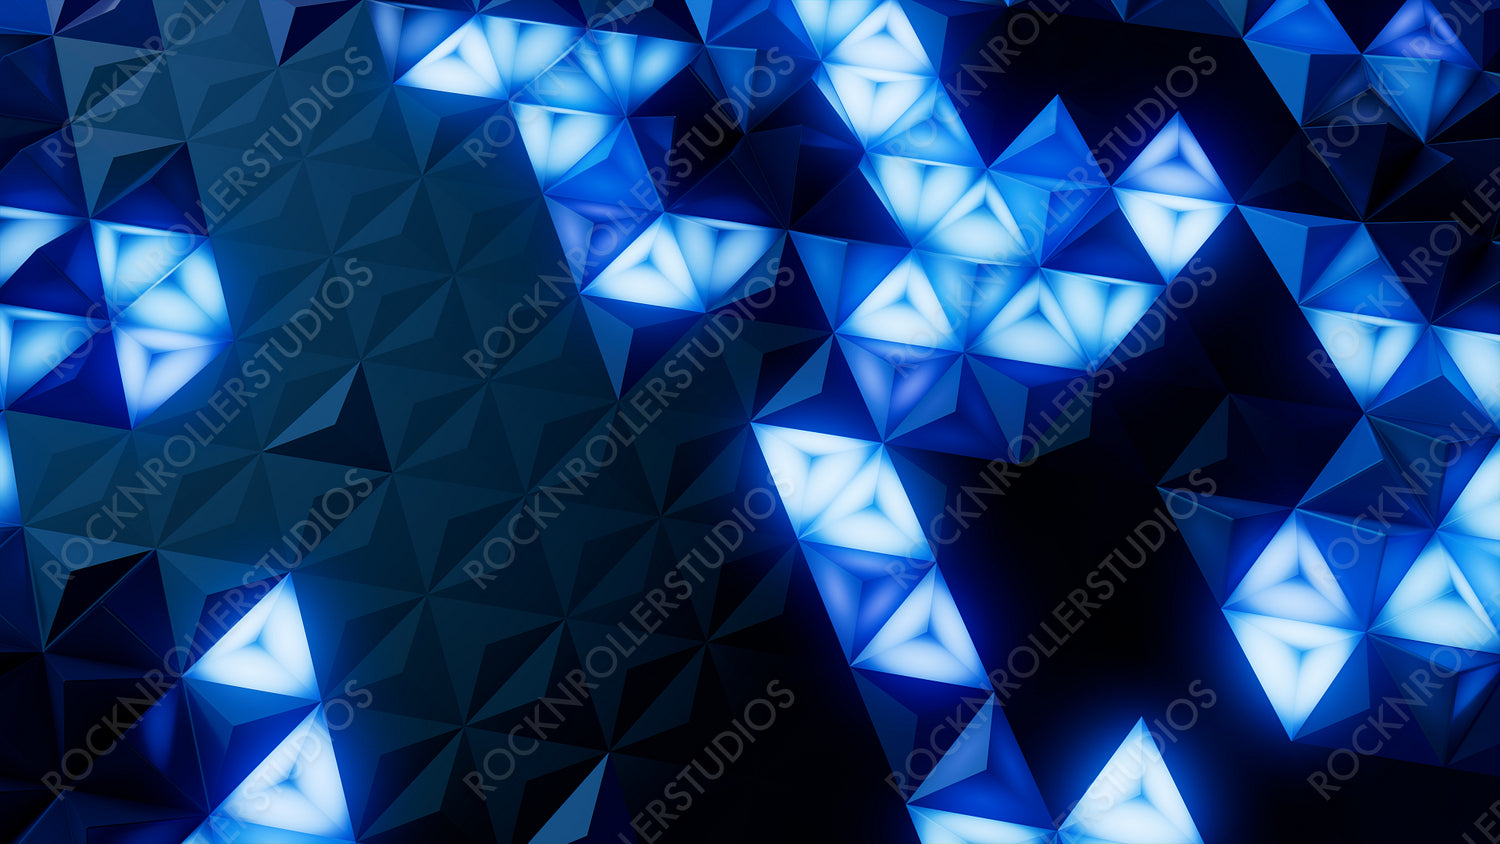 Illuminated, Blue Polygonal Surface with Triangular Pyramids. Modern, Neon 3d Texture.